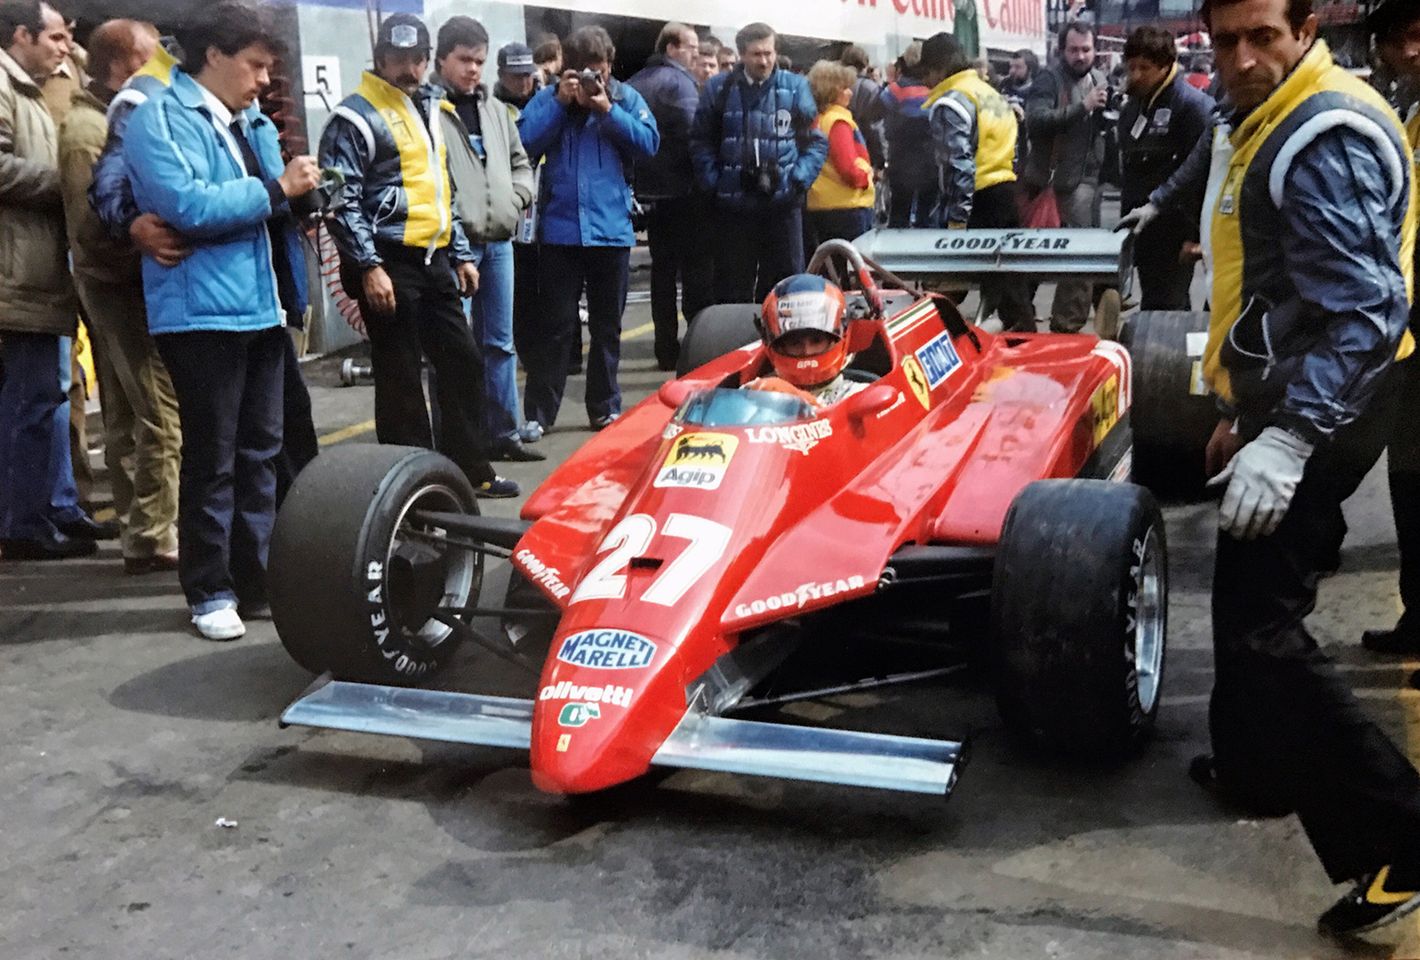 Gilles Villeneuve in his Ferrari at Zolder in 1982.